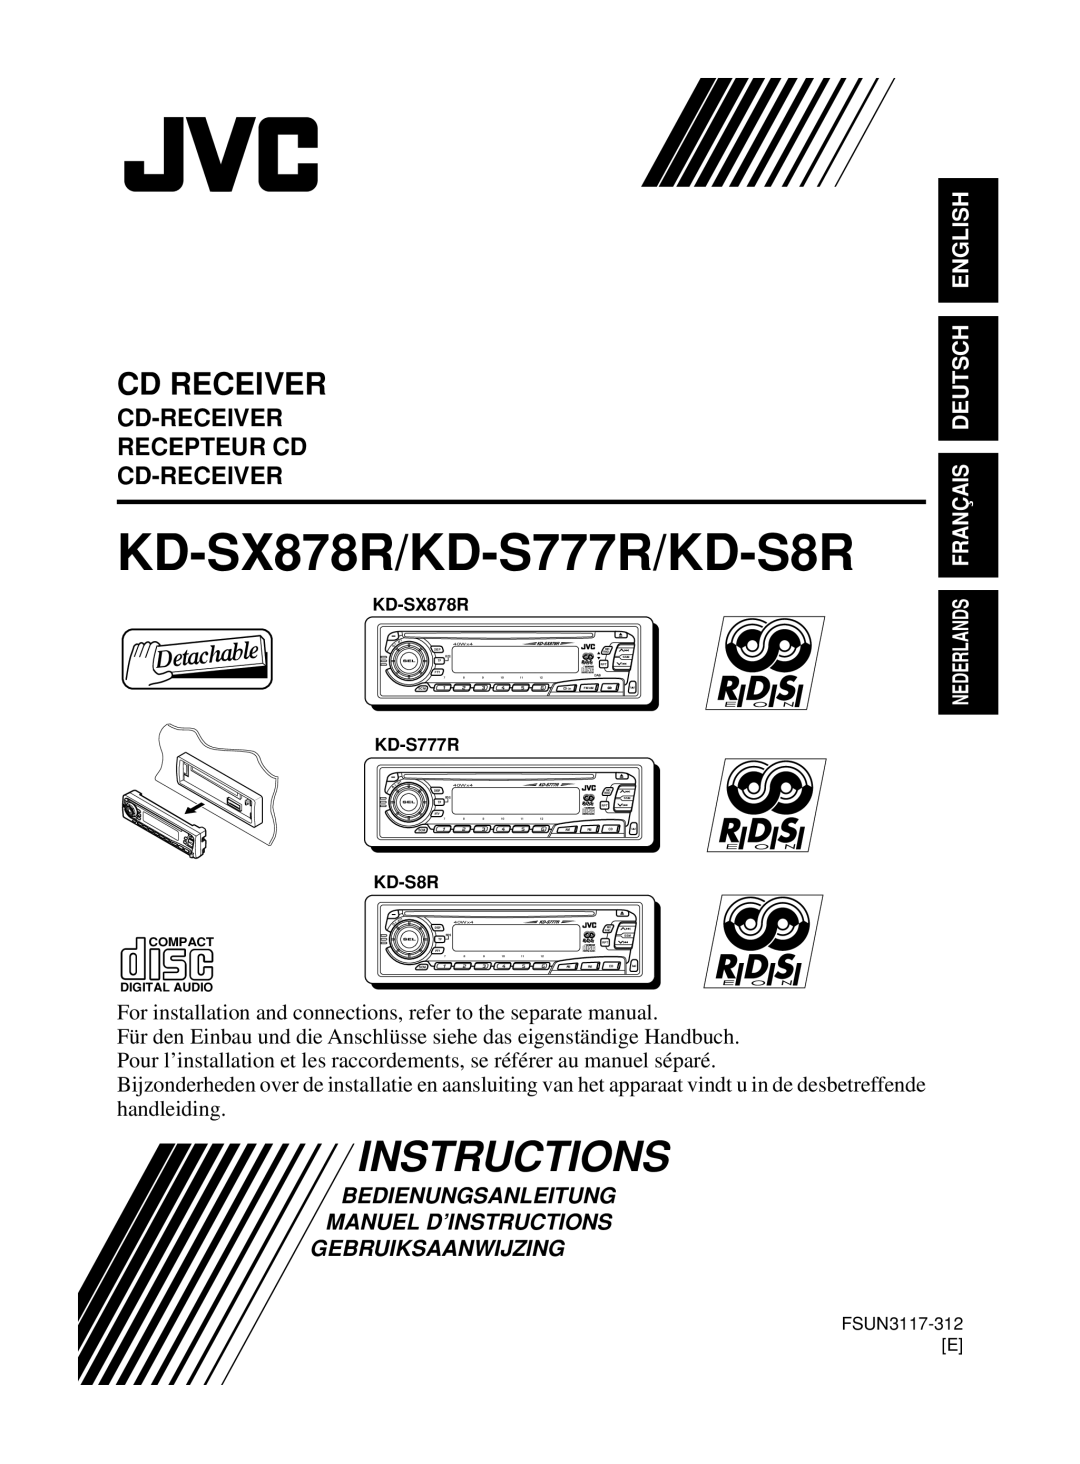 JVC manual Instructions, KD-SX878R/KD-S777R/KD-S8R, Cd Receiver, Cd-Receiver Recepteur Cd Cd-Receiver, English Deutsch 